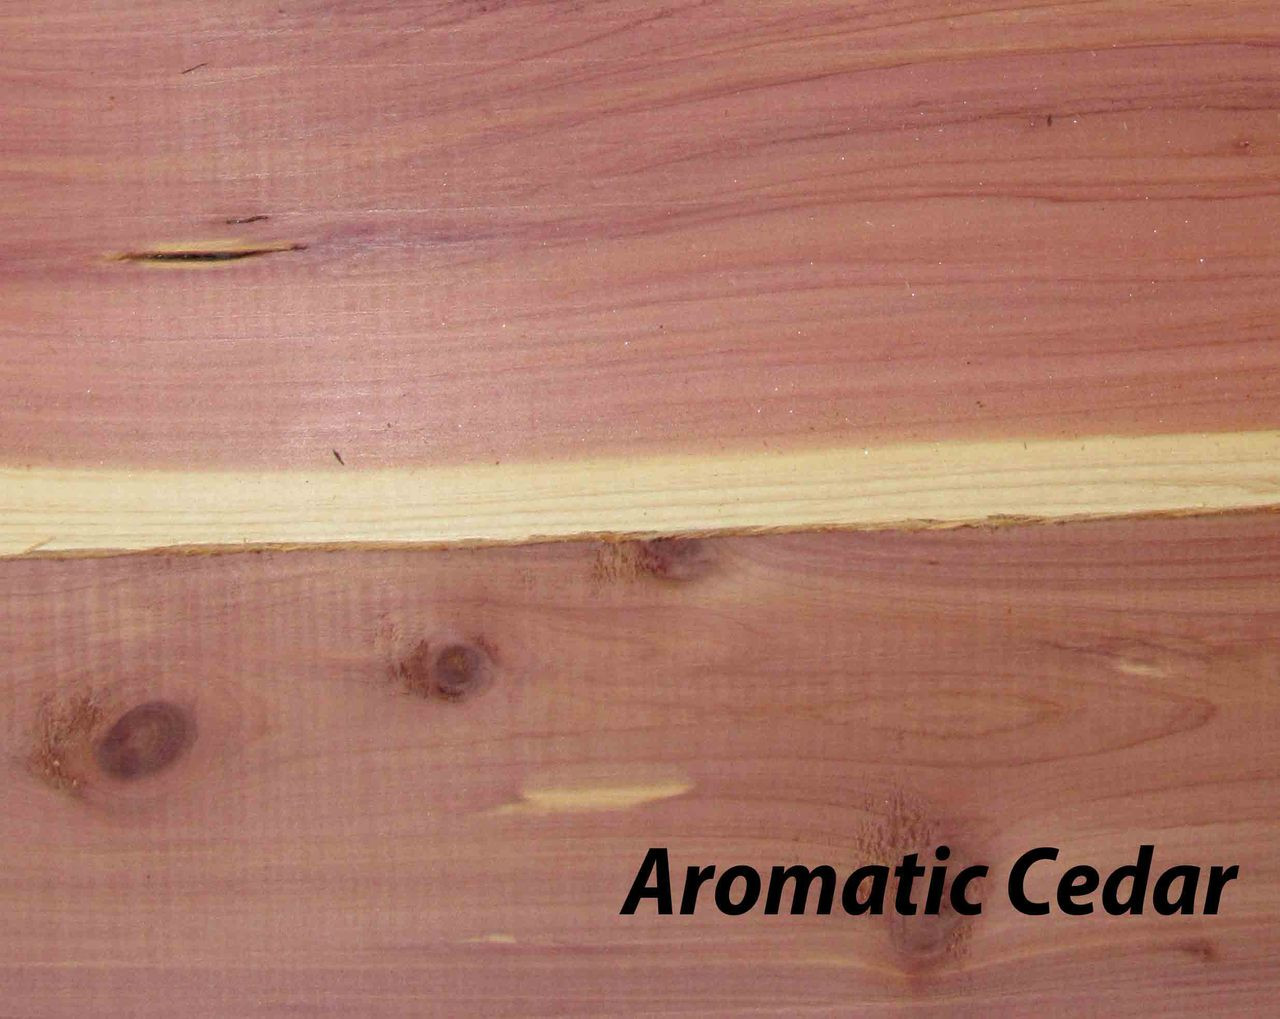  Aromatic Cedar